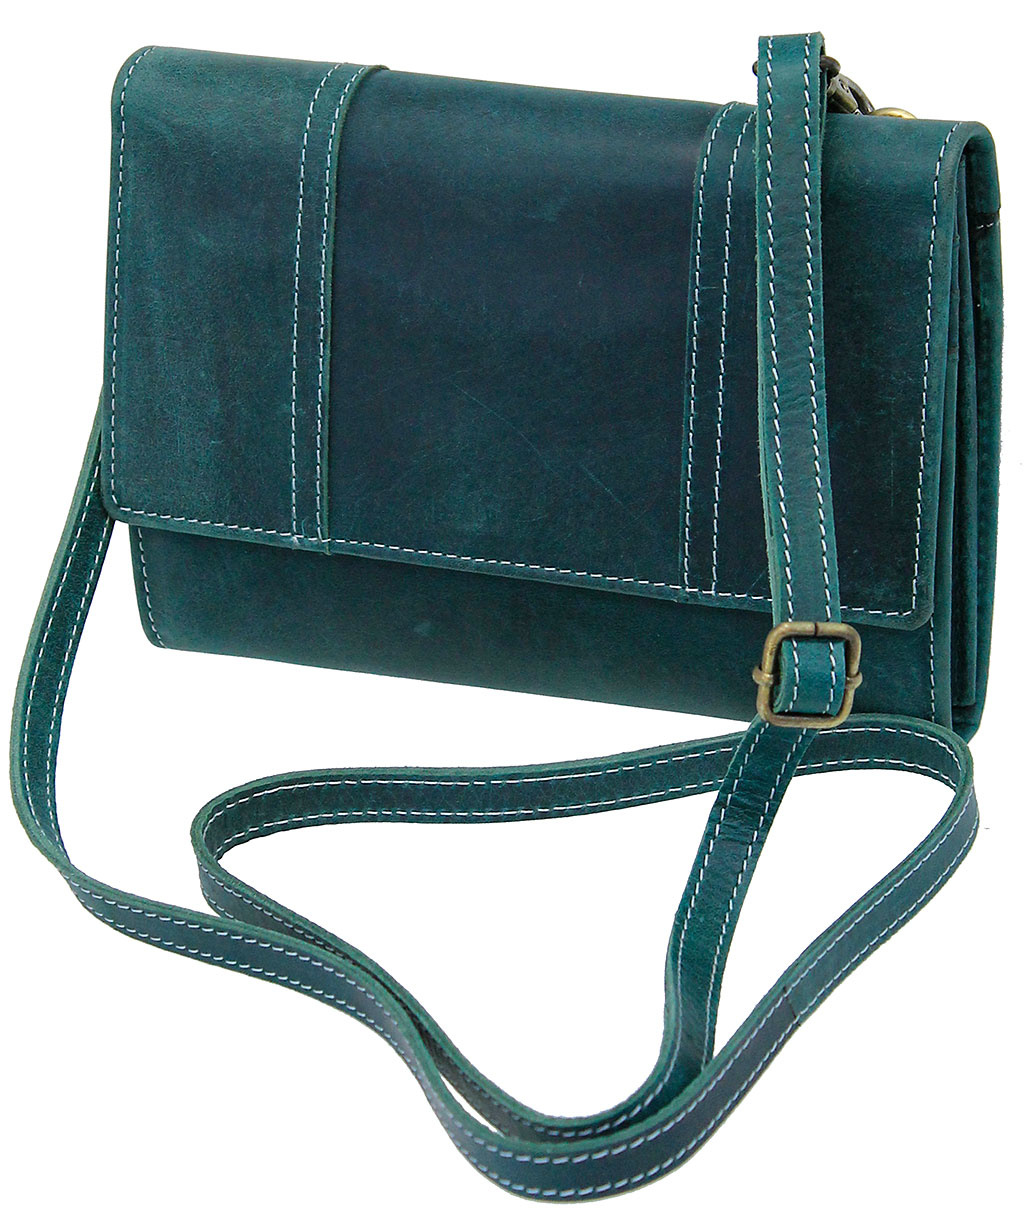 Hycurey Clutch Bags for Women Evening Clutch Purses Large Woven Clutch  Purse Oversized Clutch Wallet Wrist Bags for Girls: Handbags: Amazon.com